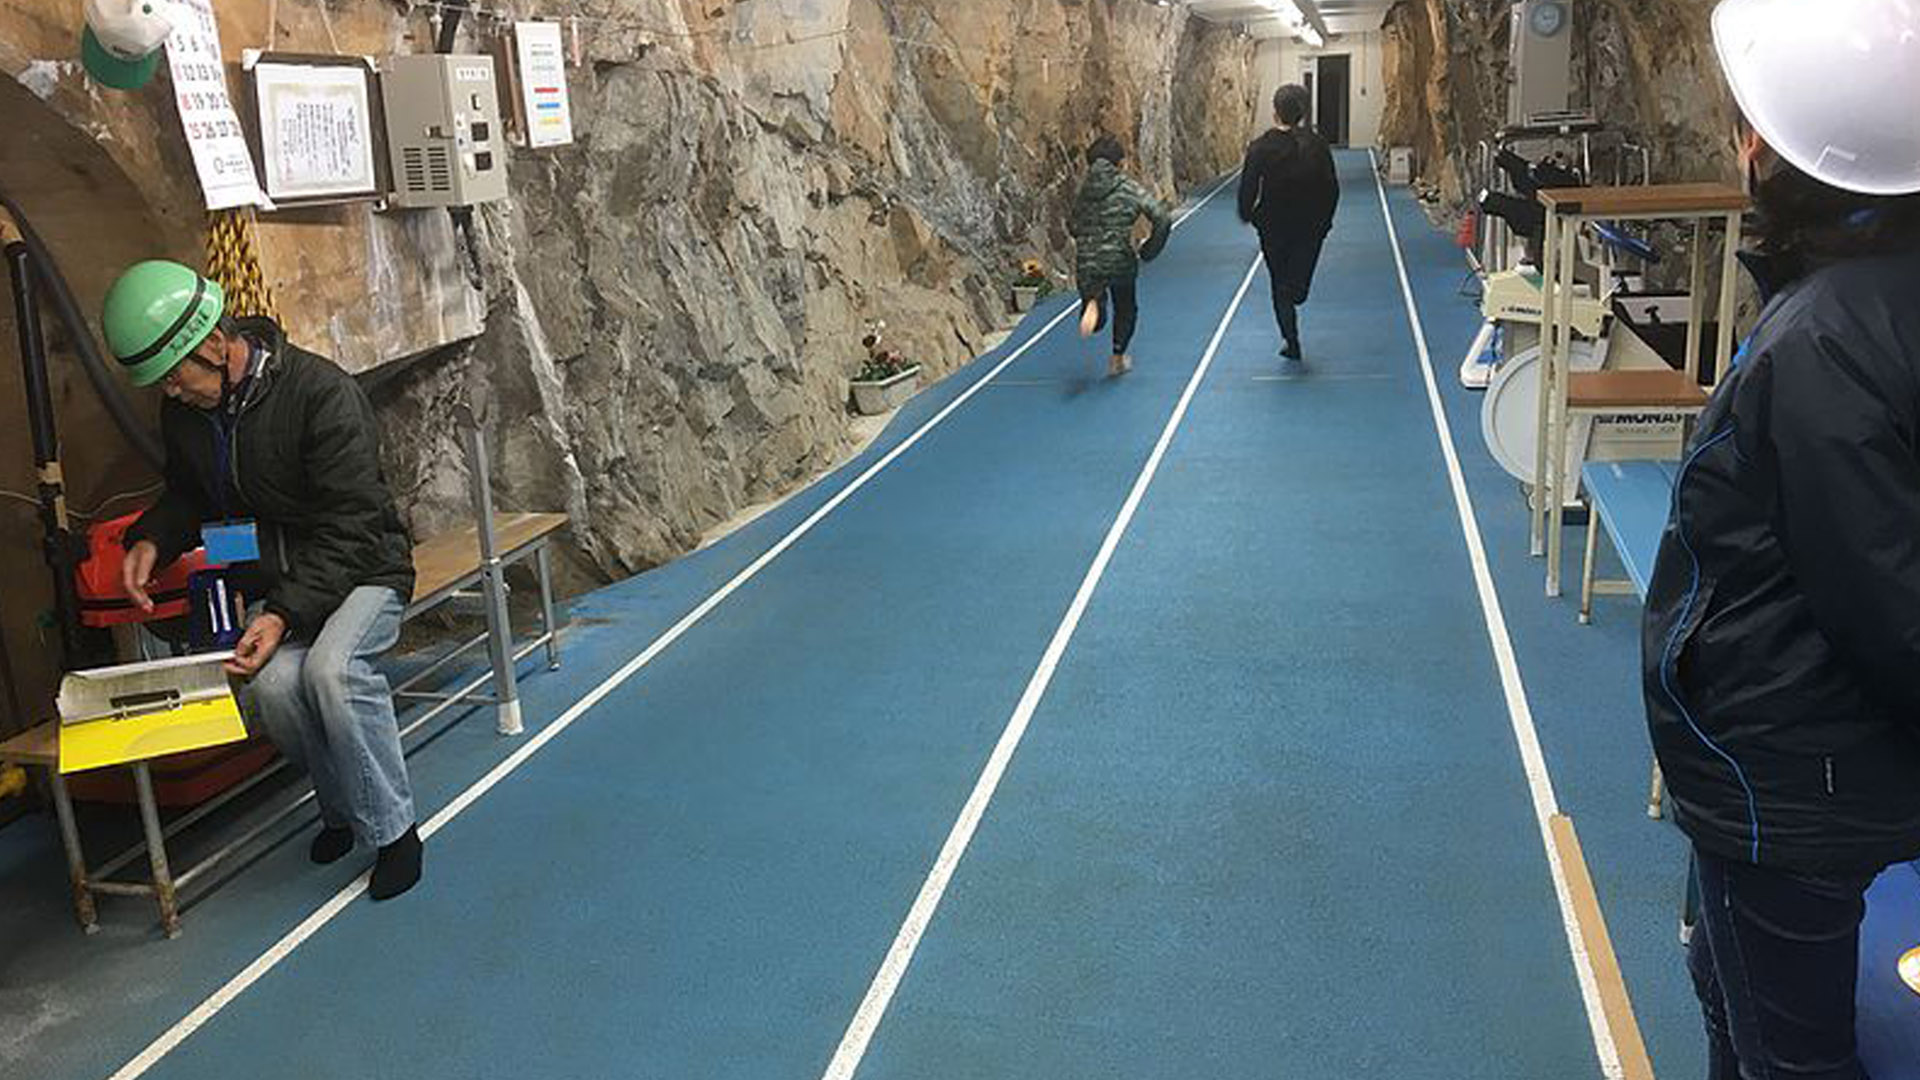 Athletics track inside cave